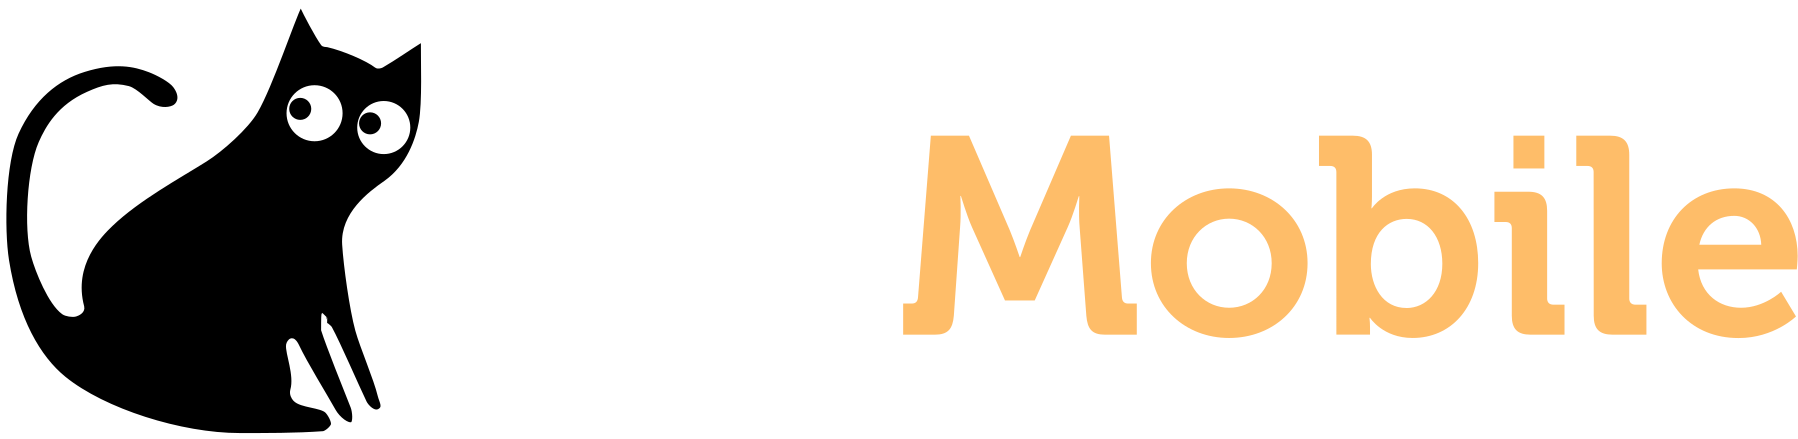 CatMobile.ro logo